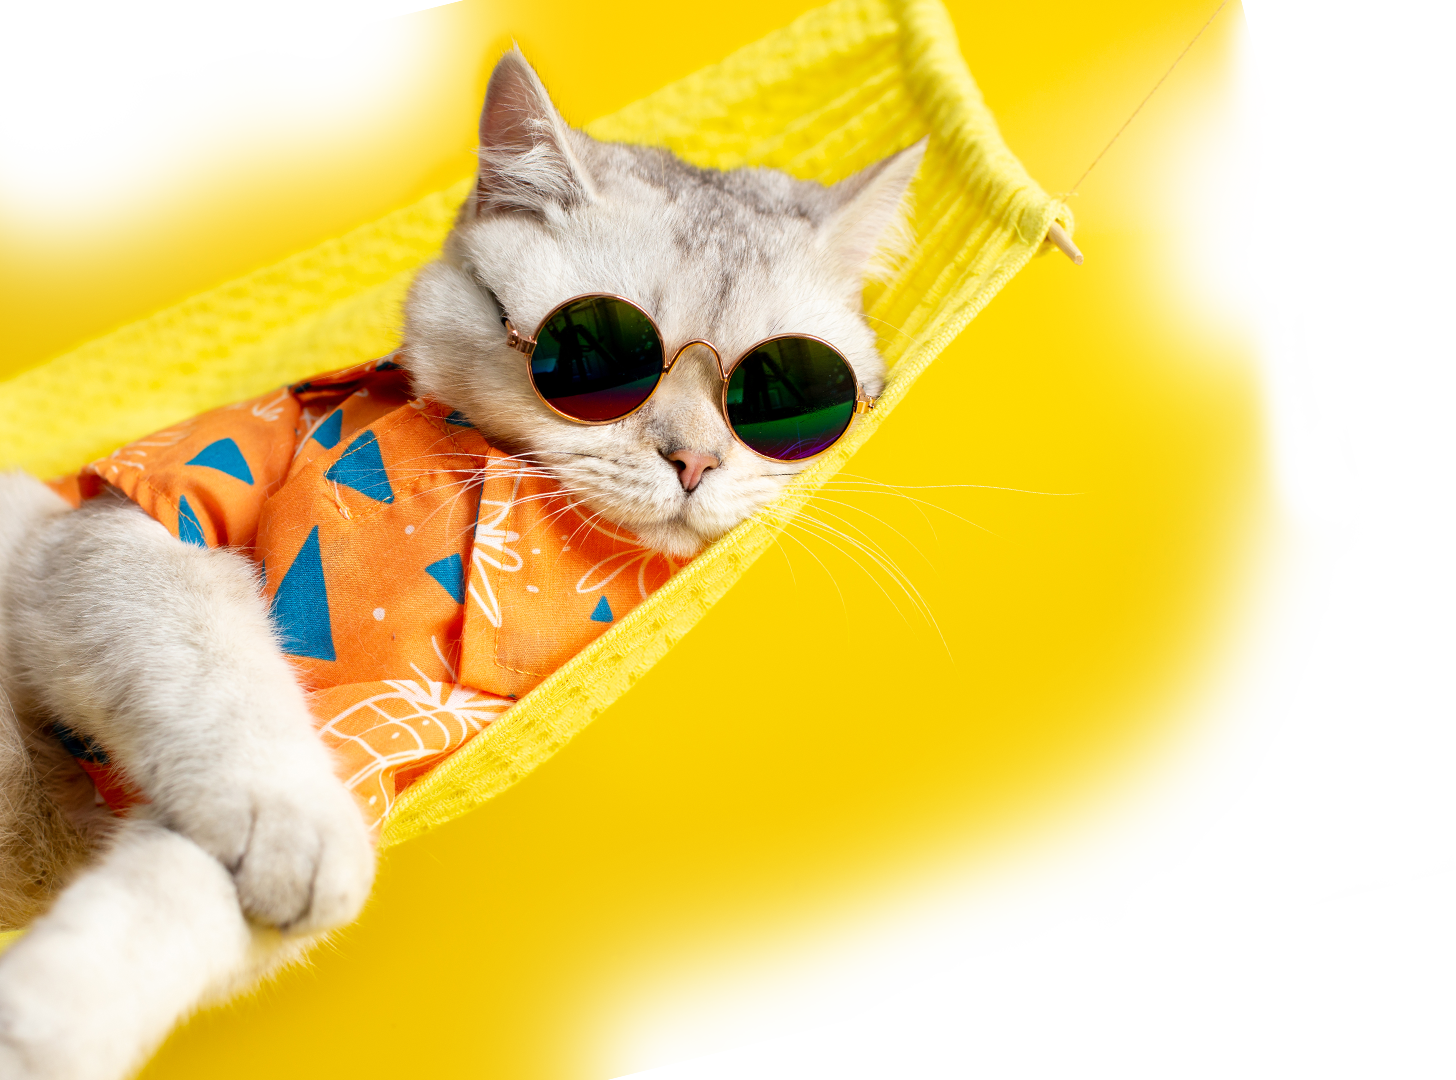 A cat wearing a Hawaiian shirt and sunglasses, in a hammock.